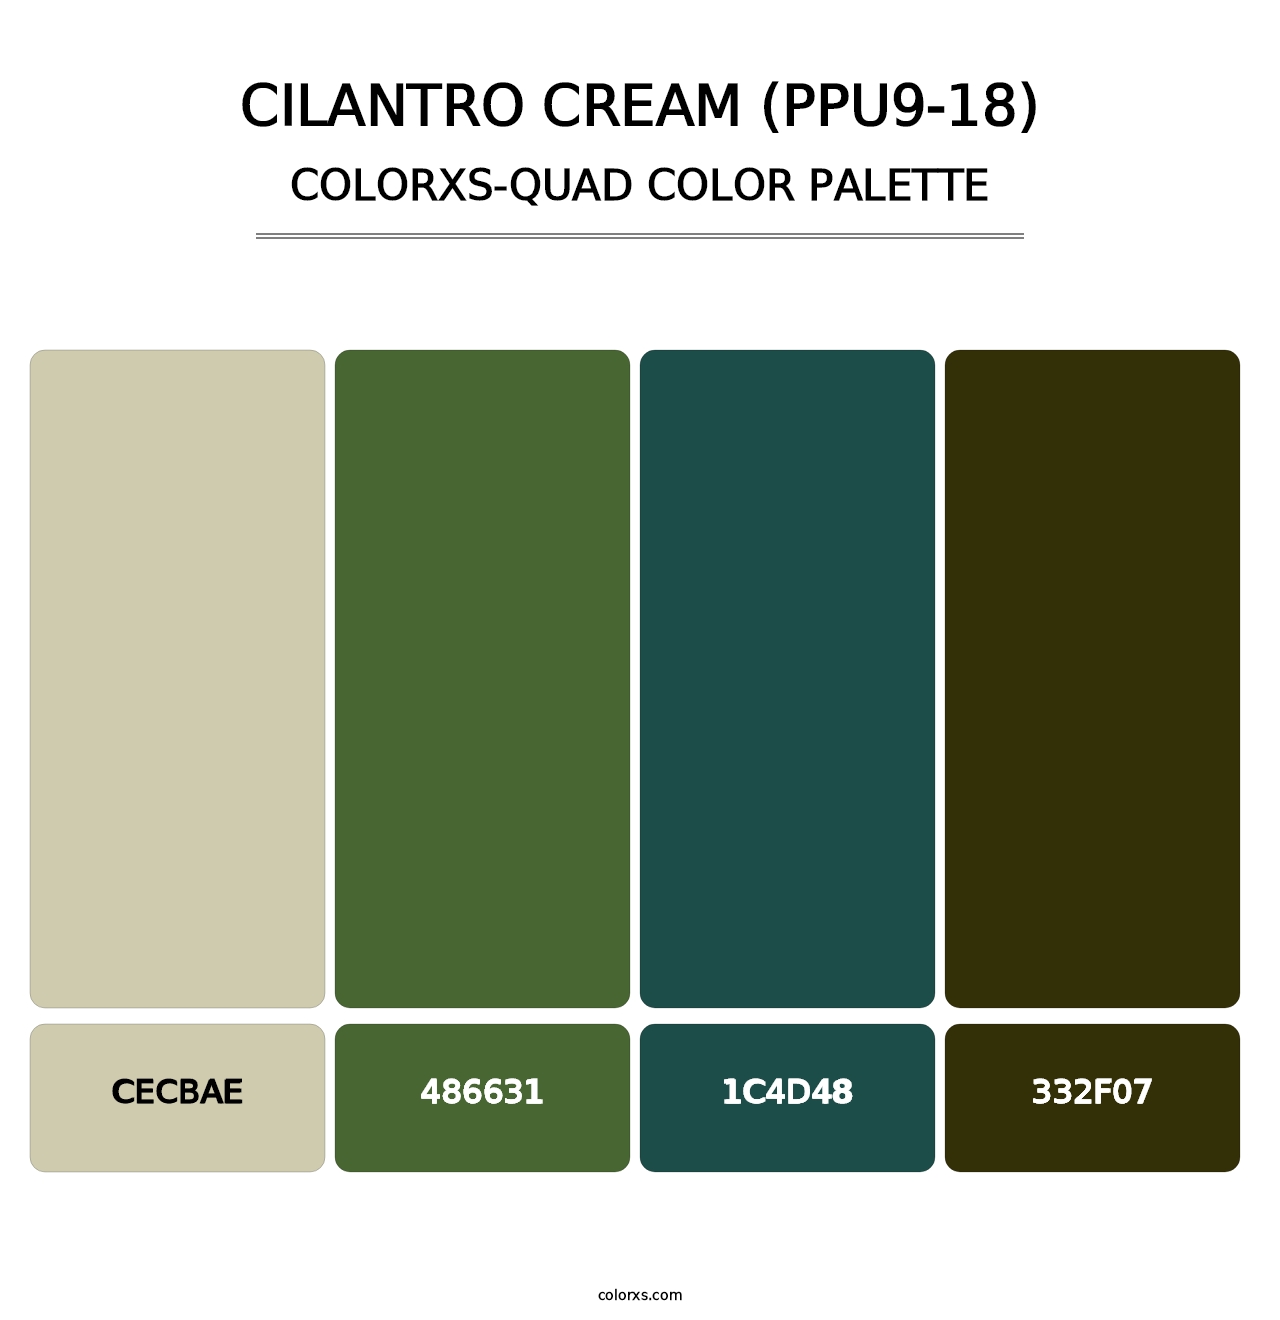 Cilantro Cream (PPU9-18) - Colorxs Quad Palette